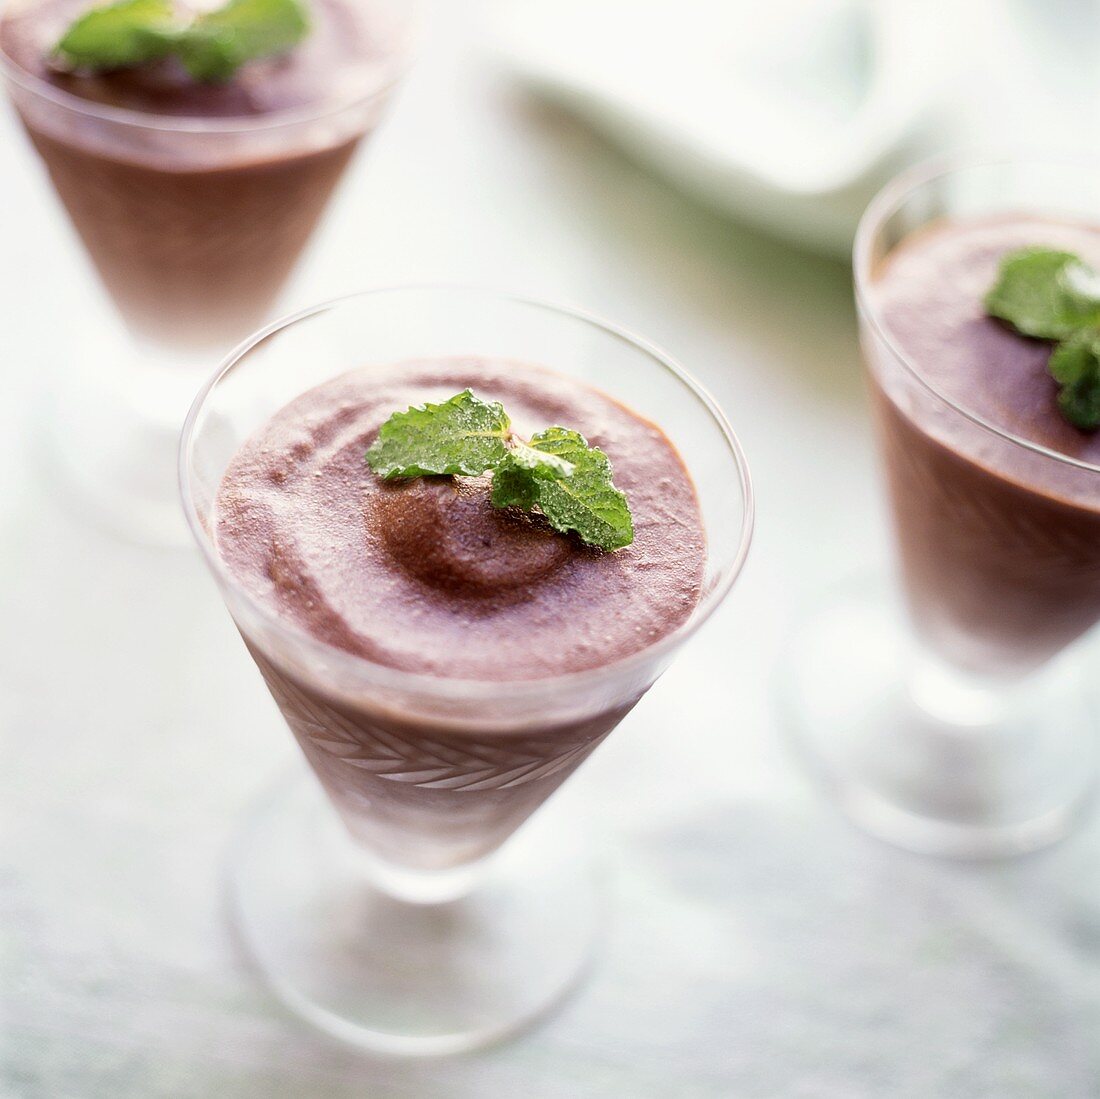 Blackberry ice cream, with mint garnish, in dessert glasses